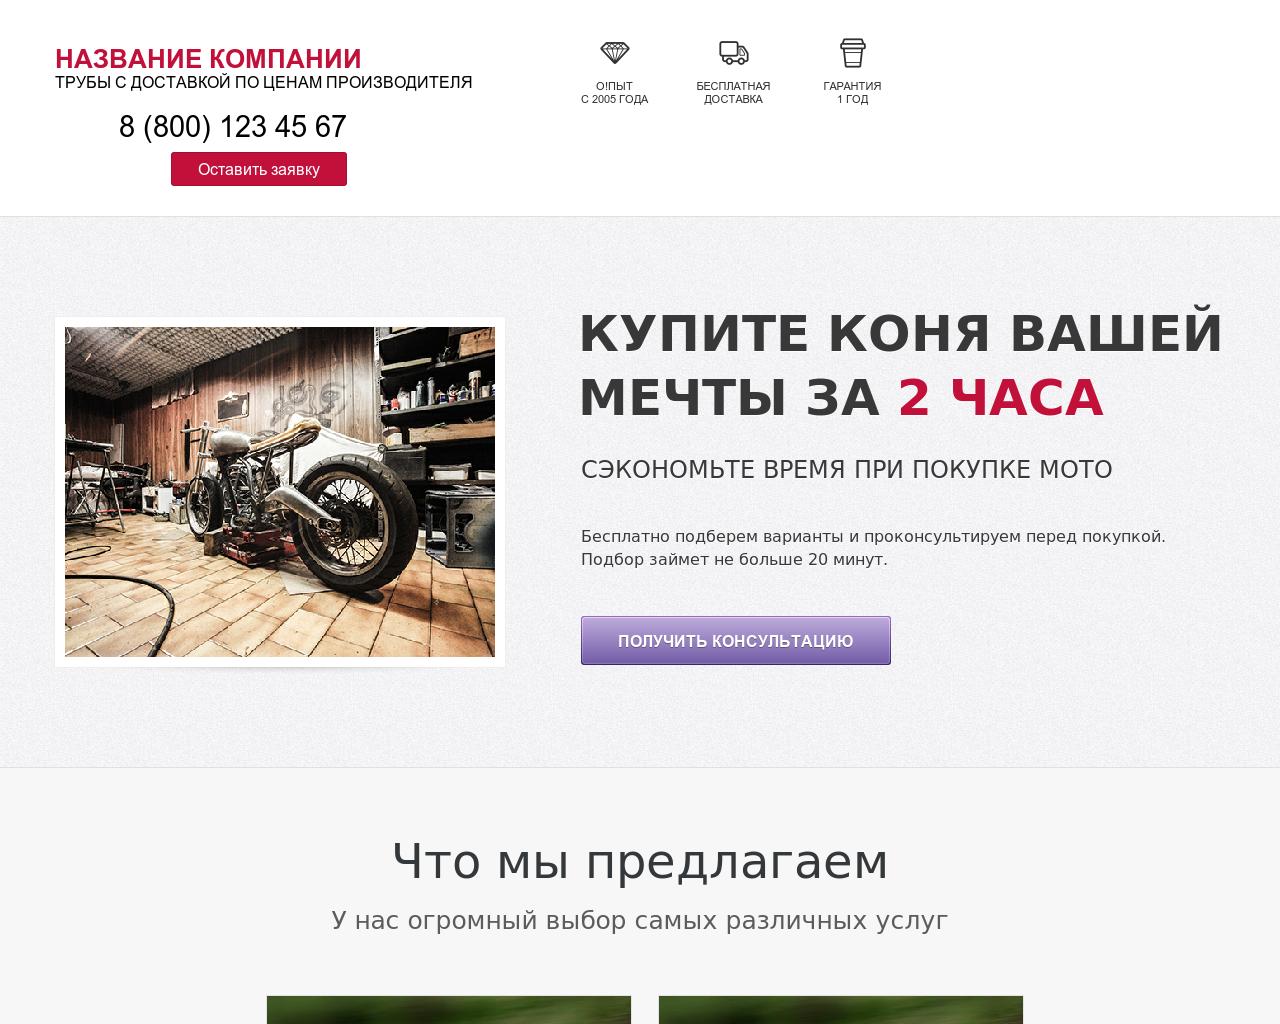 Изображение сайта vshindin.ru в разрешении 1280x1024